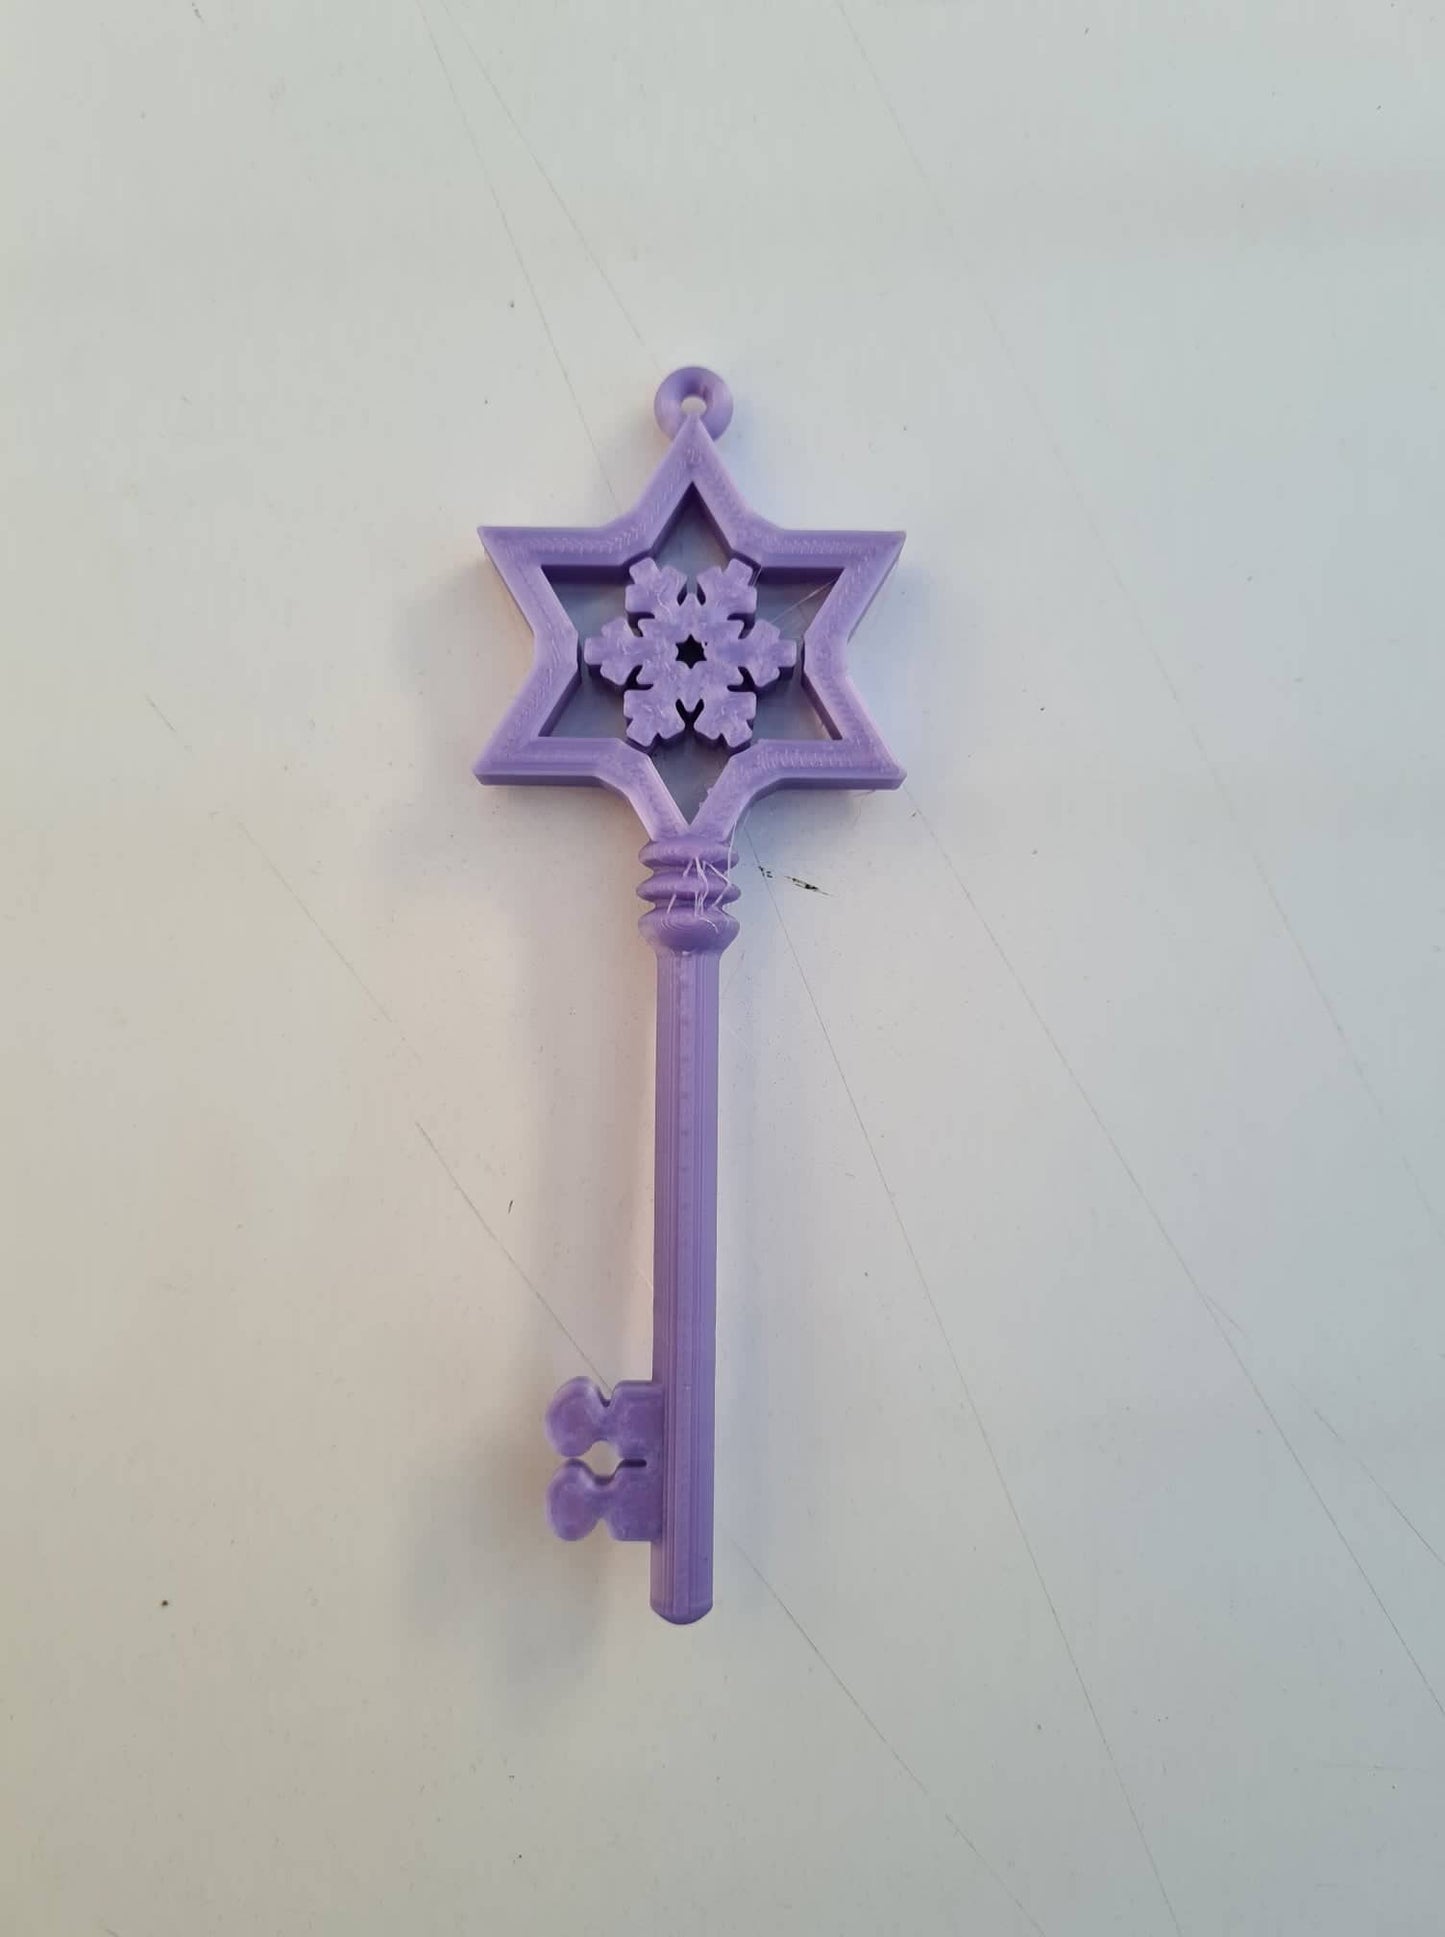 3D printed Santa keys